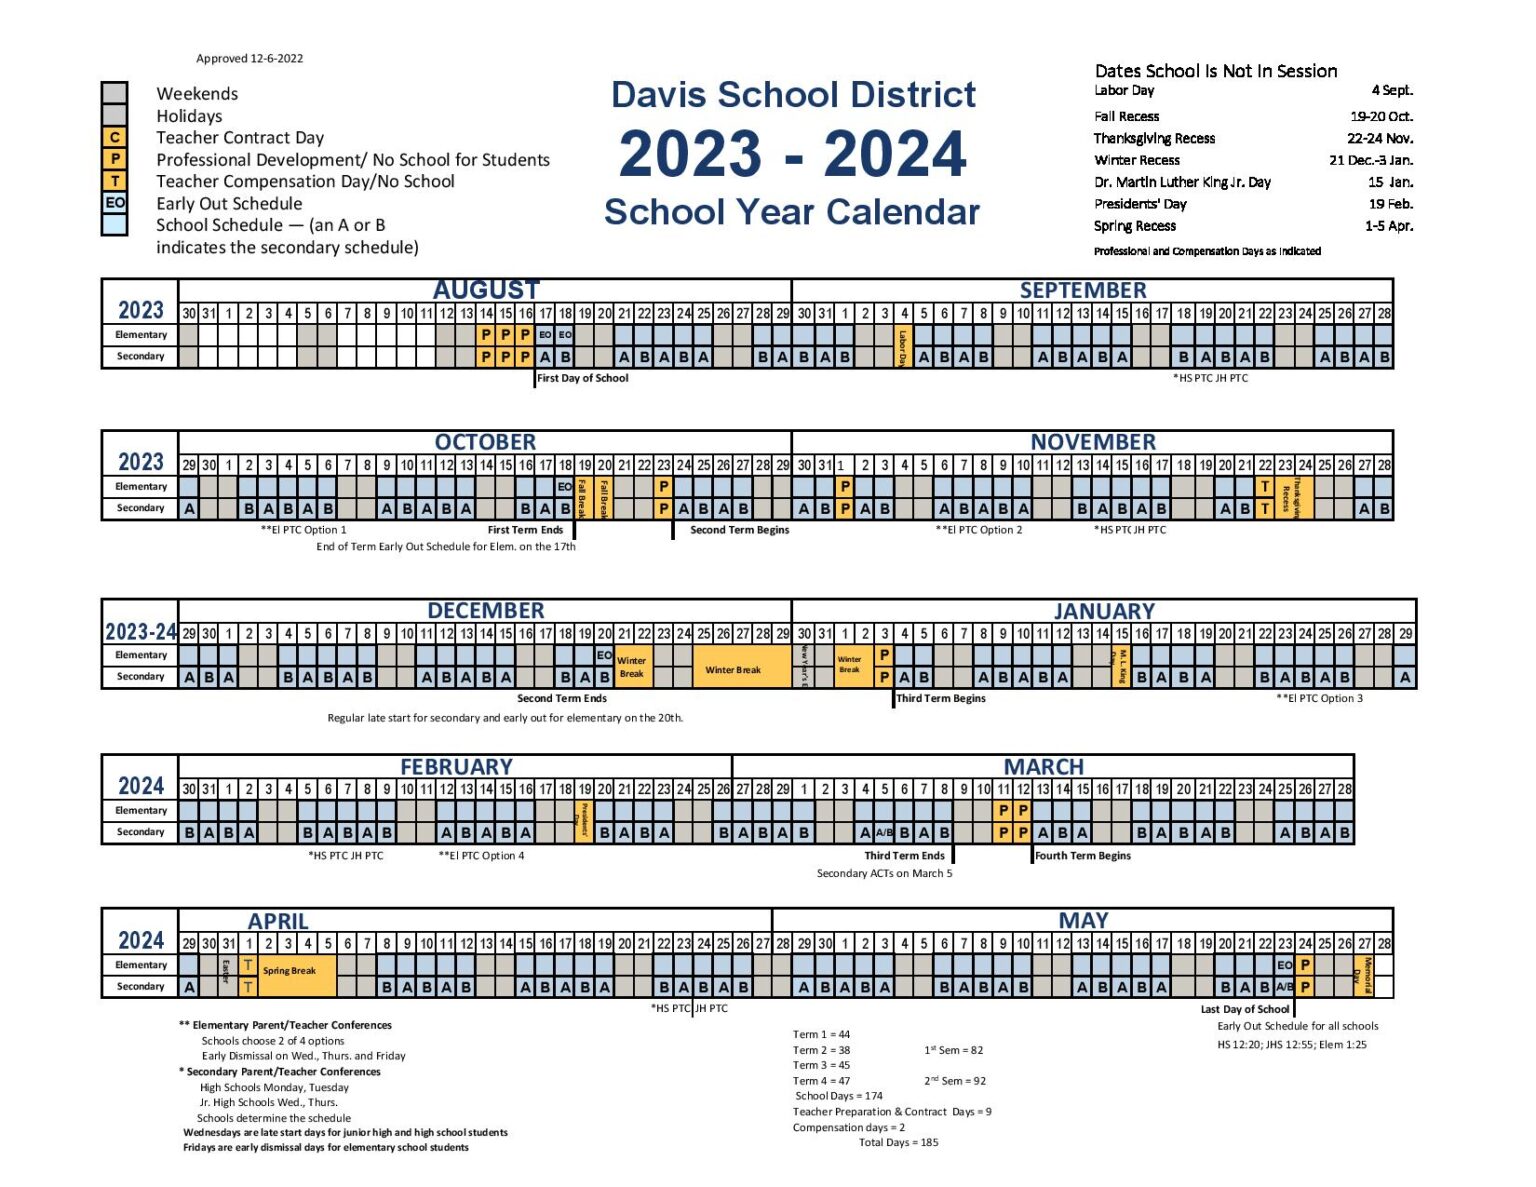 Davis School District Calendar Holidays 20232024